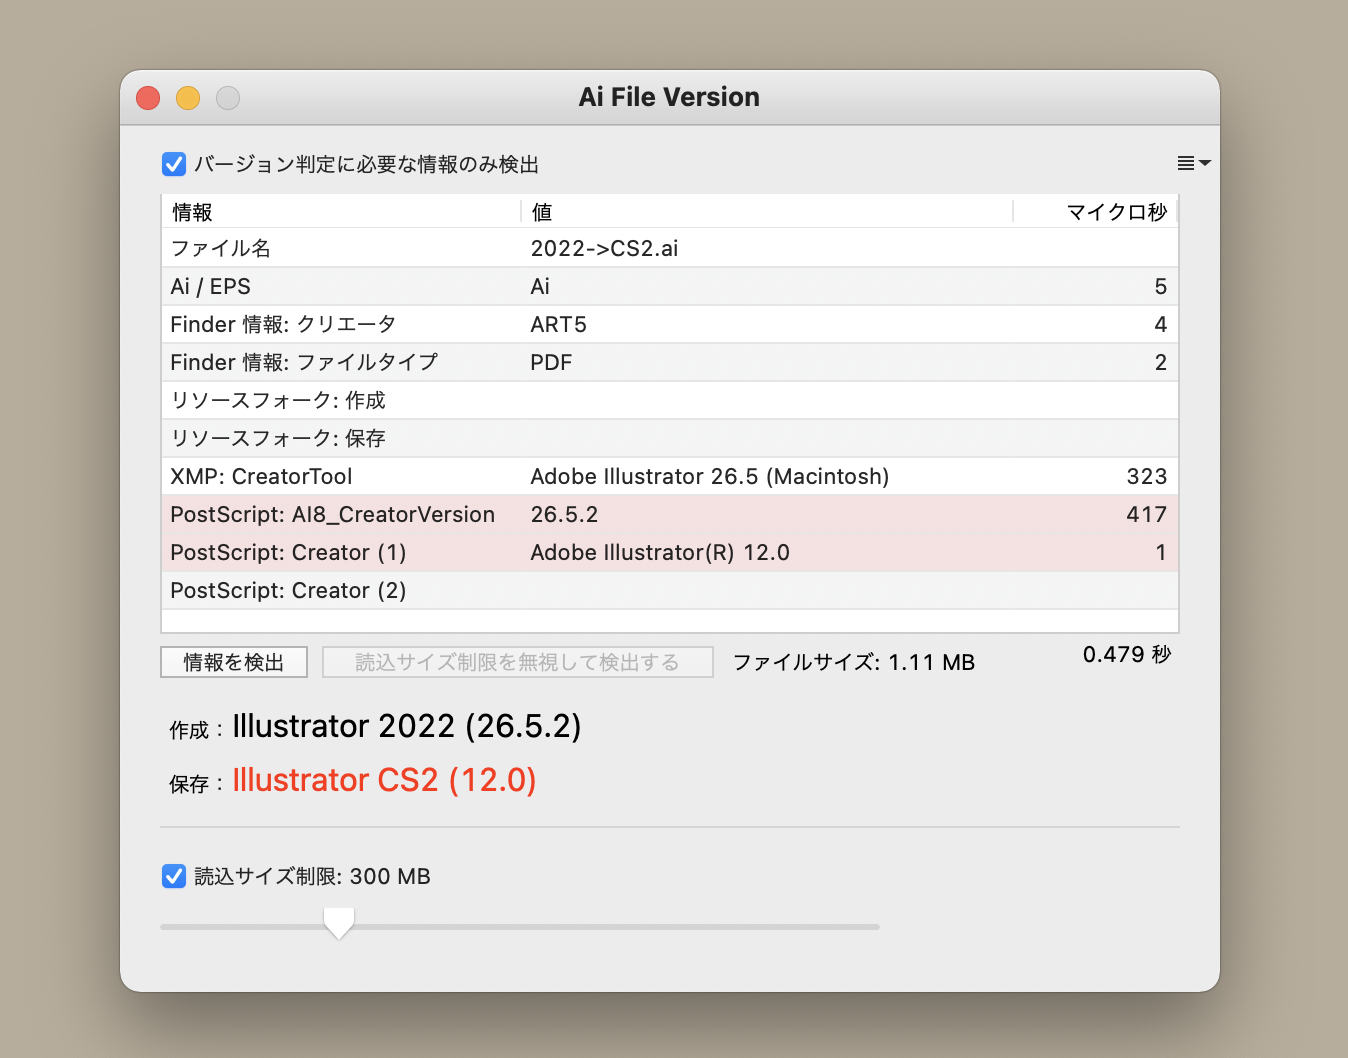 Ai File Version window